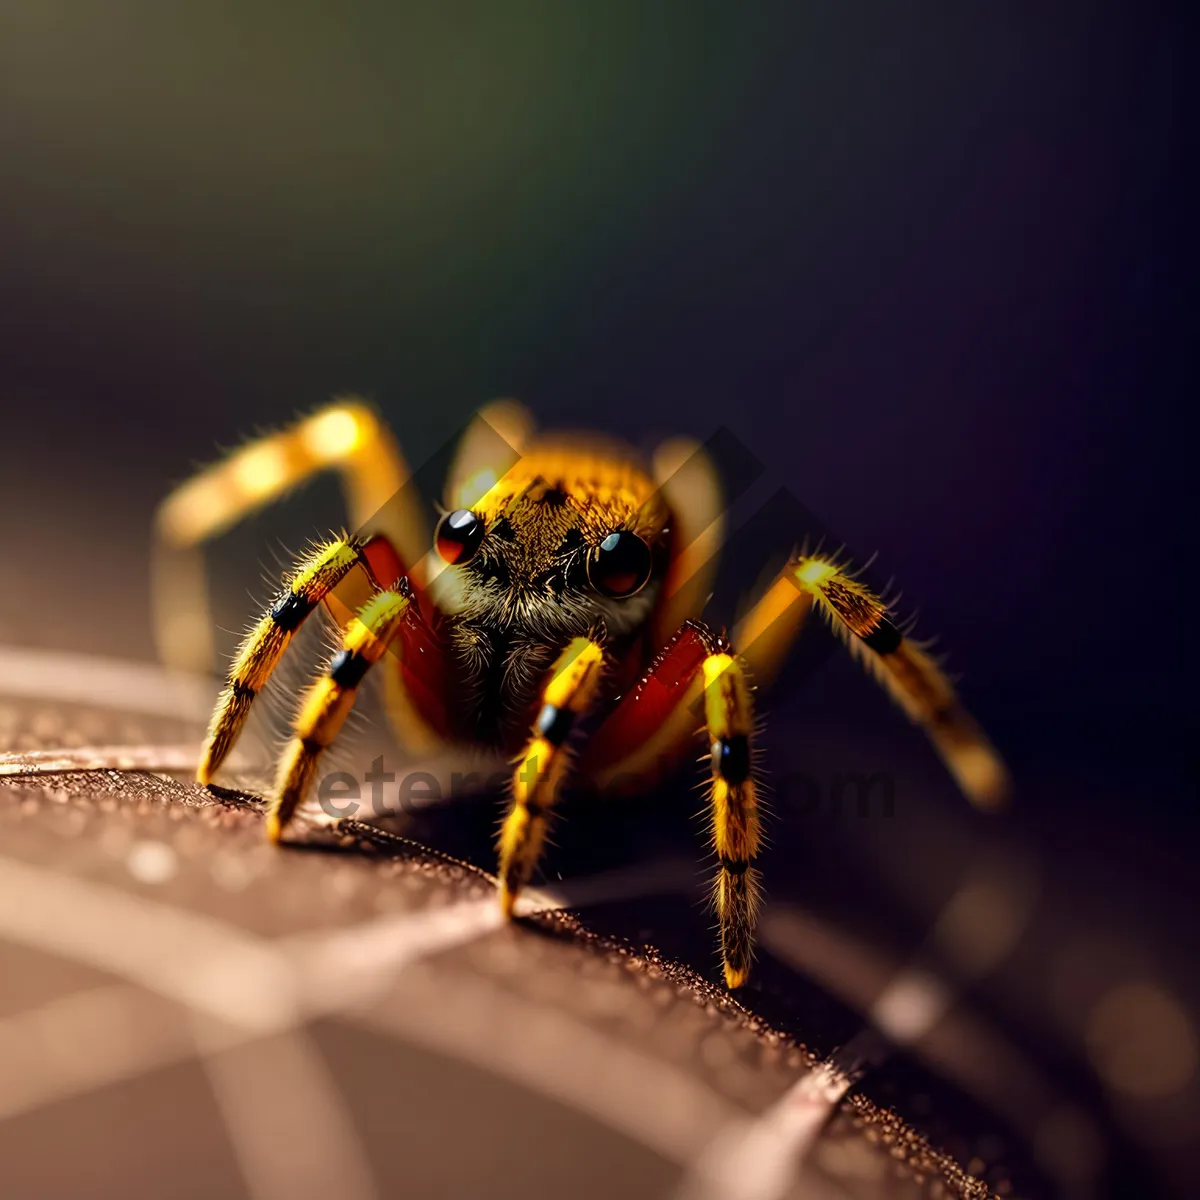 Picture of Garden Spider: Majestic Arachnid in Vibrant Yellow